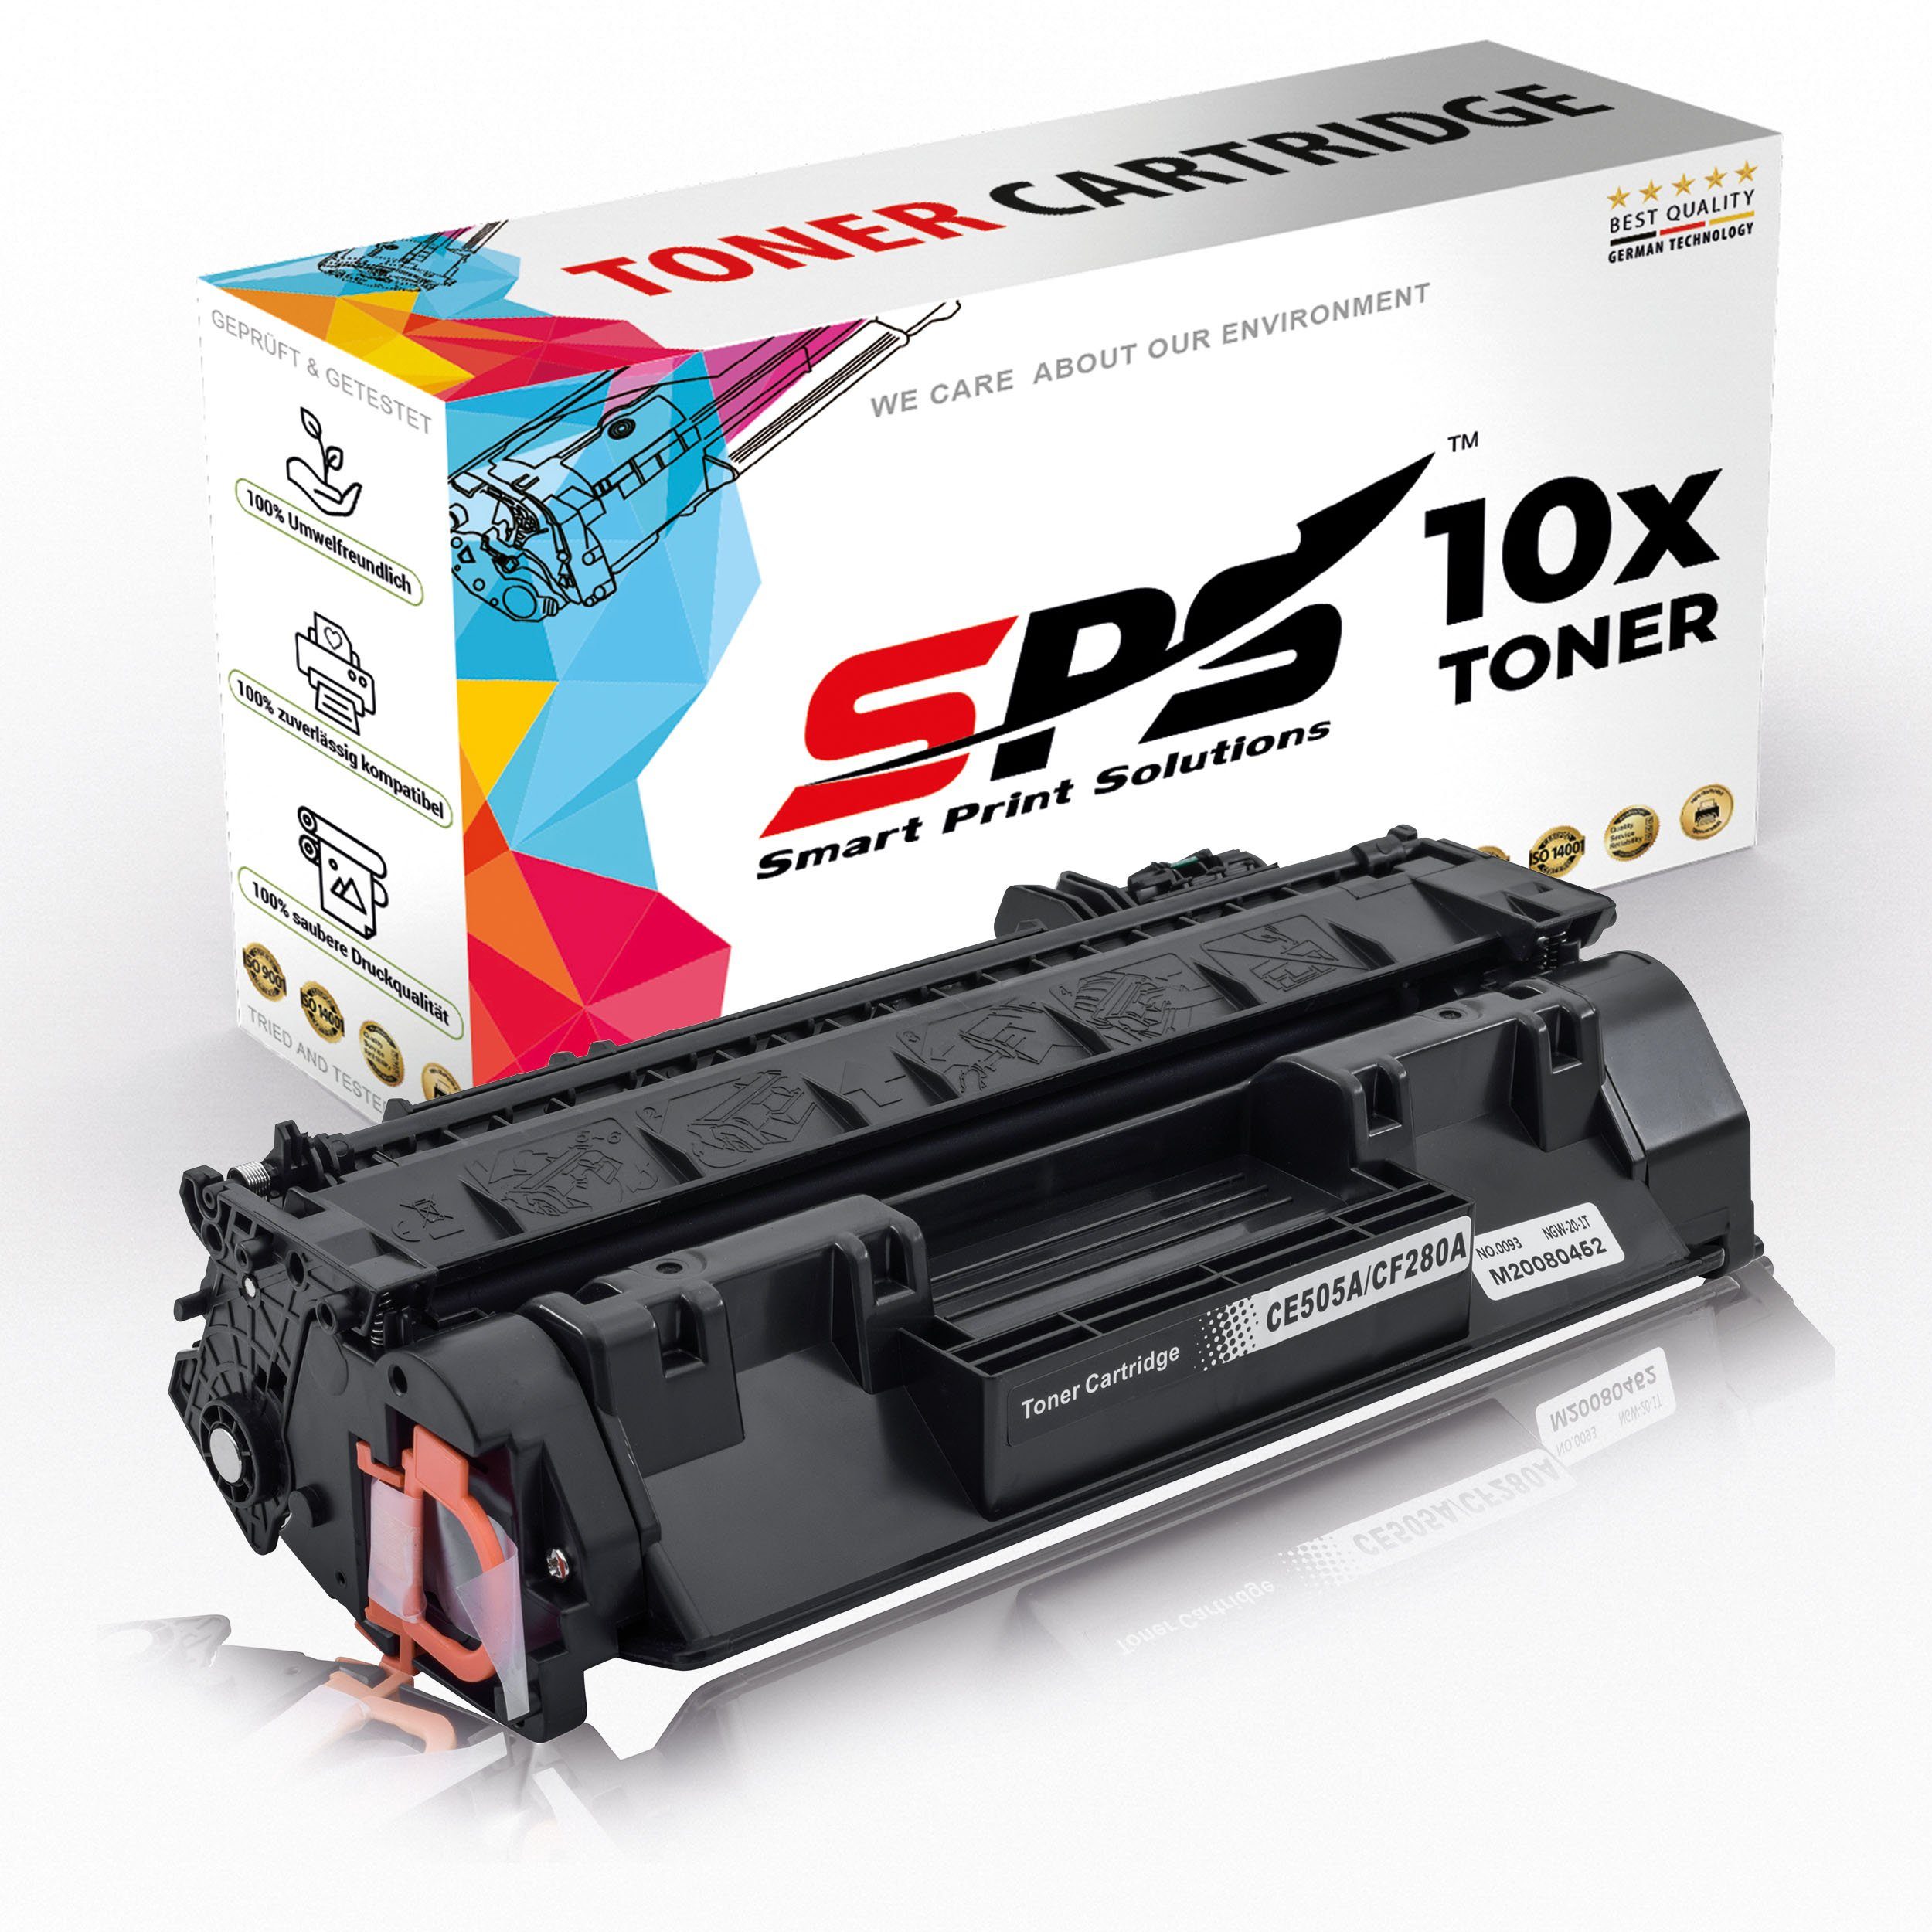 SPS Tonerkartusche Kompatibel für HP Laserjet Pro 400 MFP M425 80A, (10er Pack)